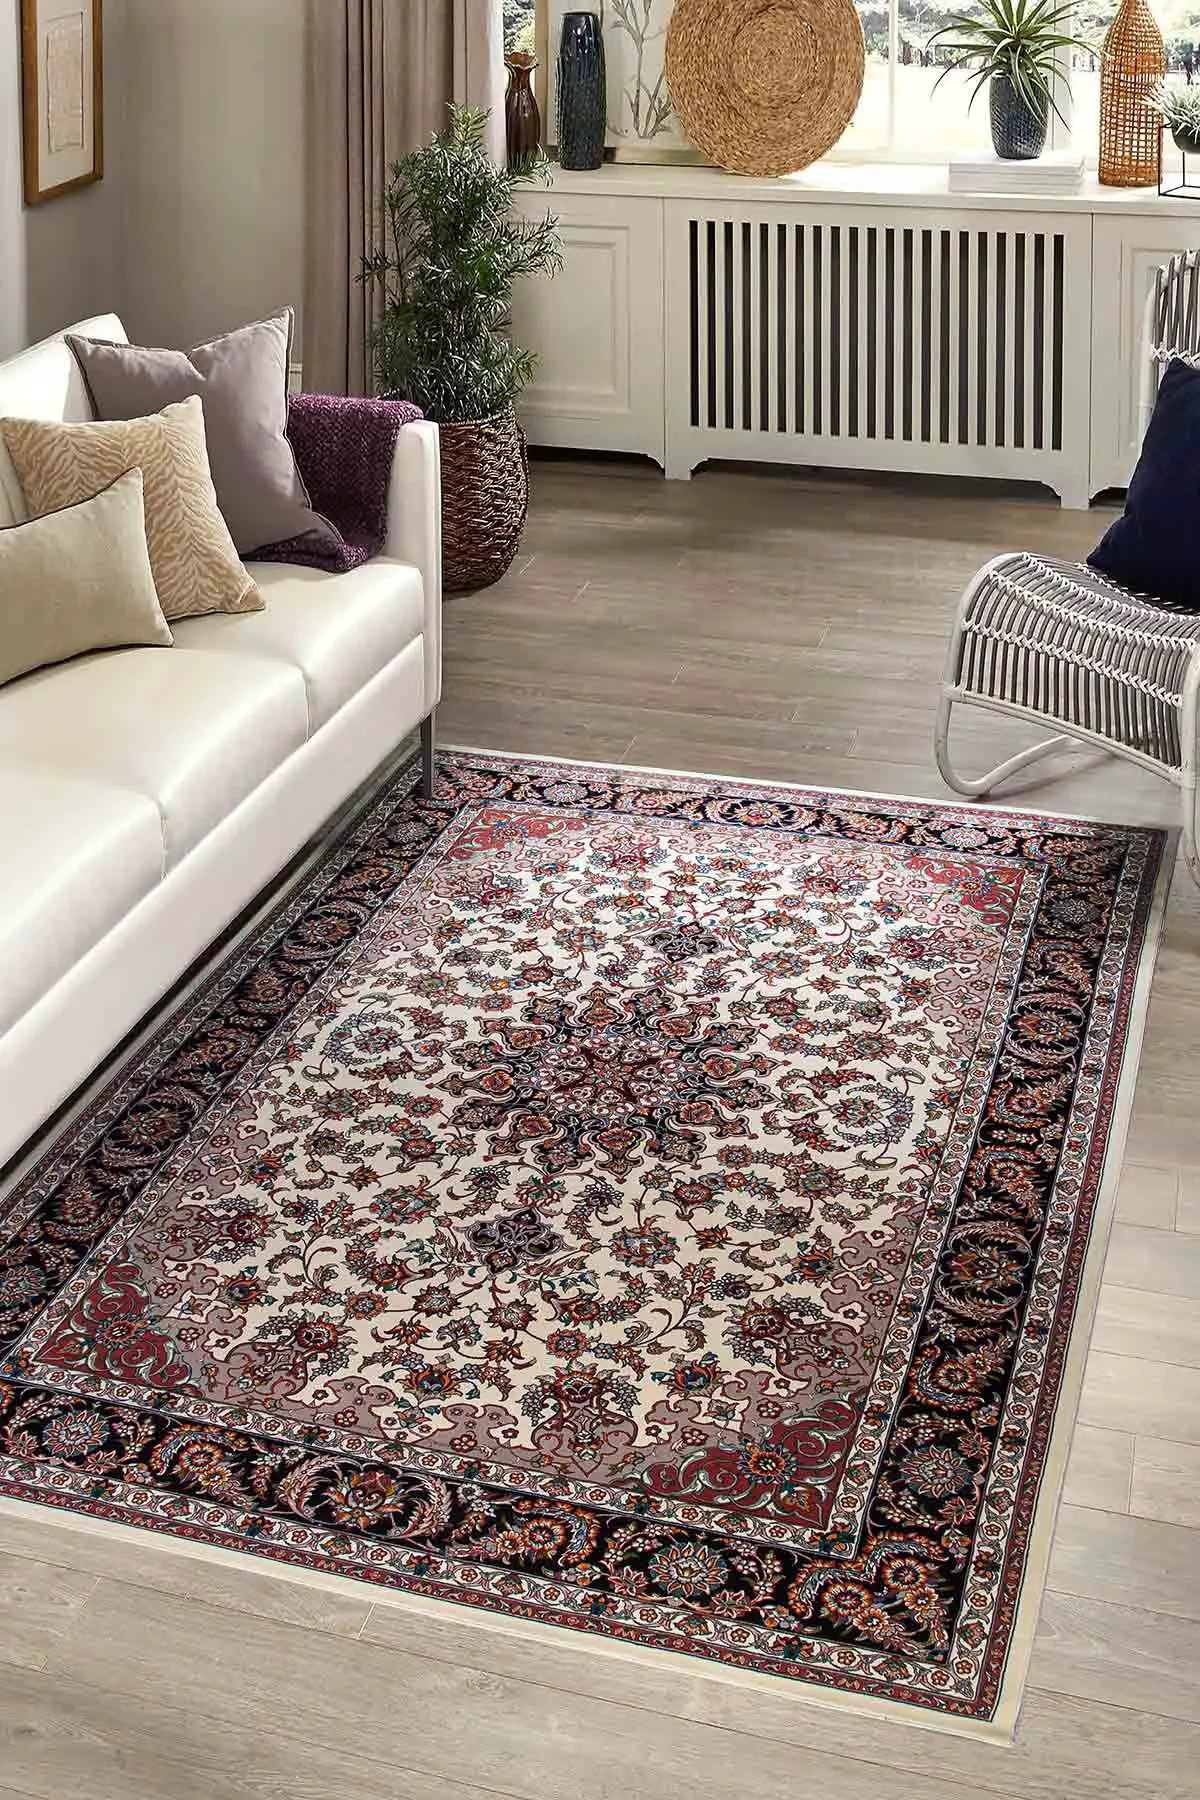 Gorgeous Persian Rugs (Sales, Repair, Carpet Cleaning)